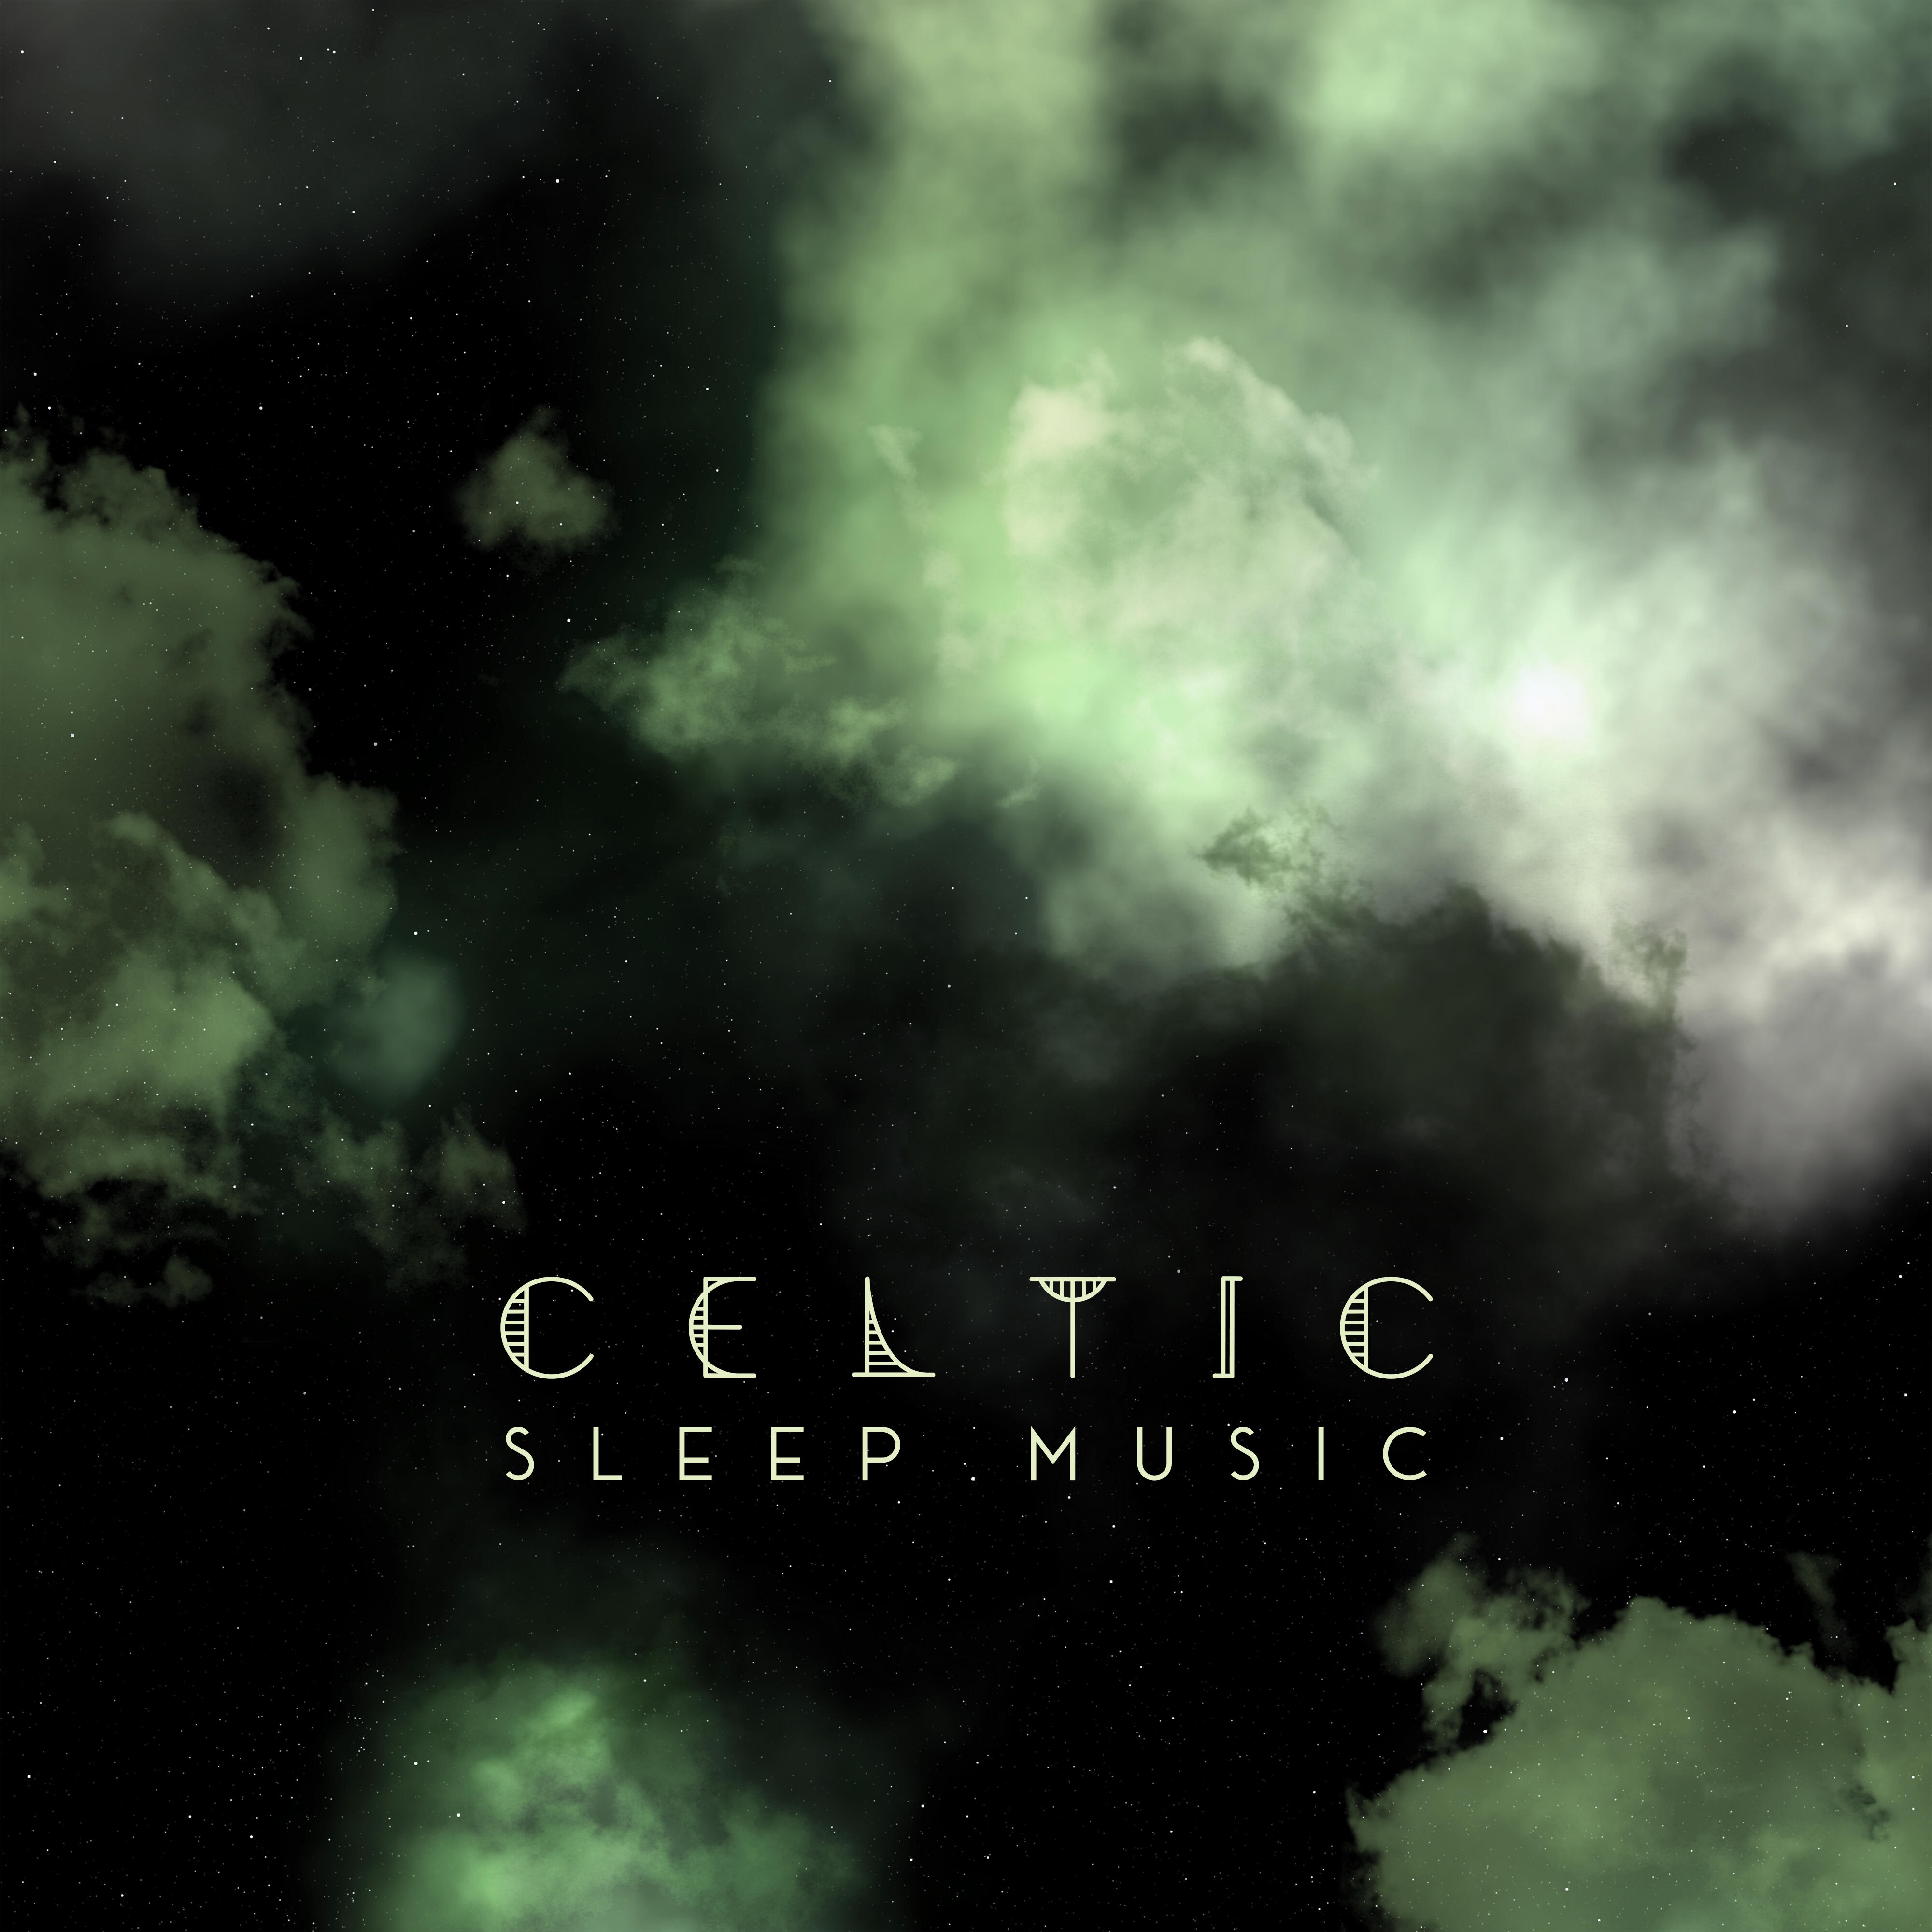 Irish Celtic Music Celtic Sleep Music Deep Relaxing And Restful 